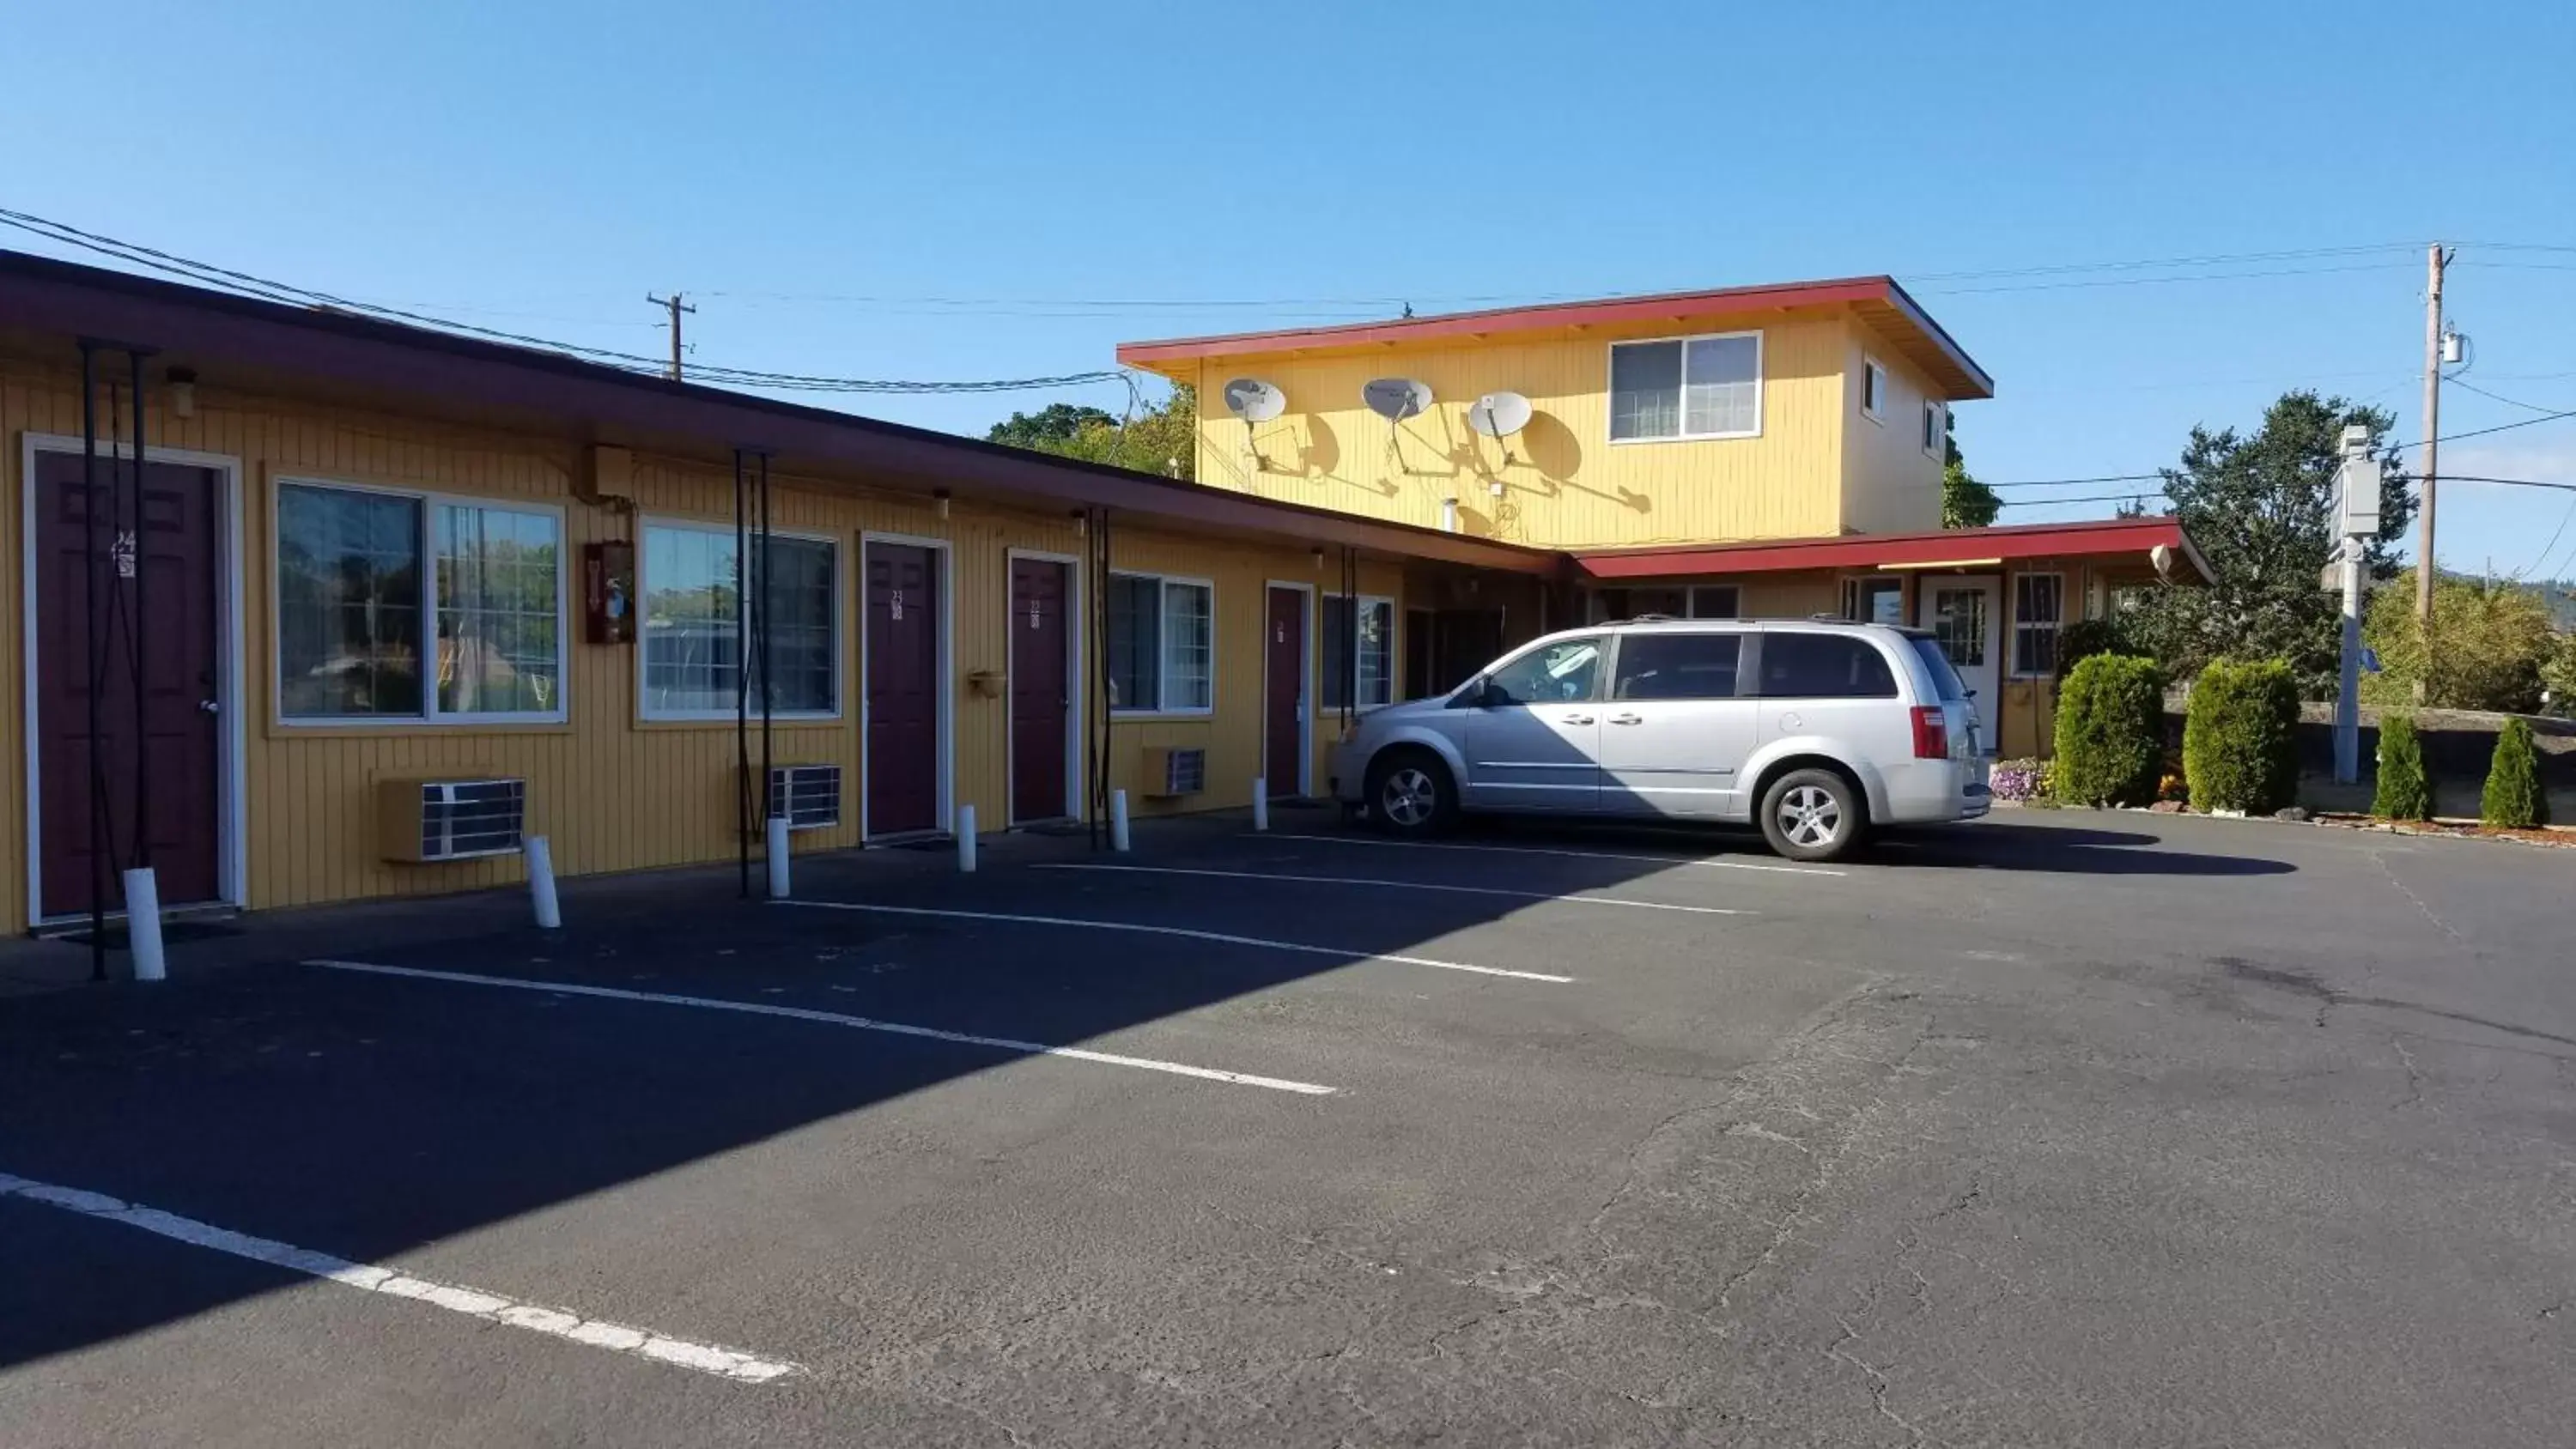 Property building, Facade/Entrance in Galaxie Motel